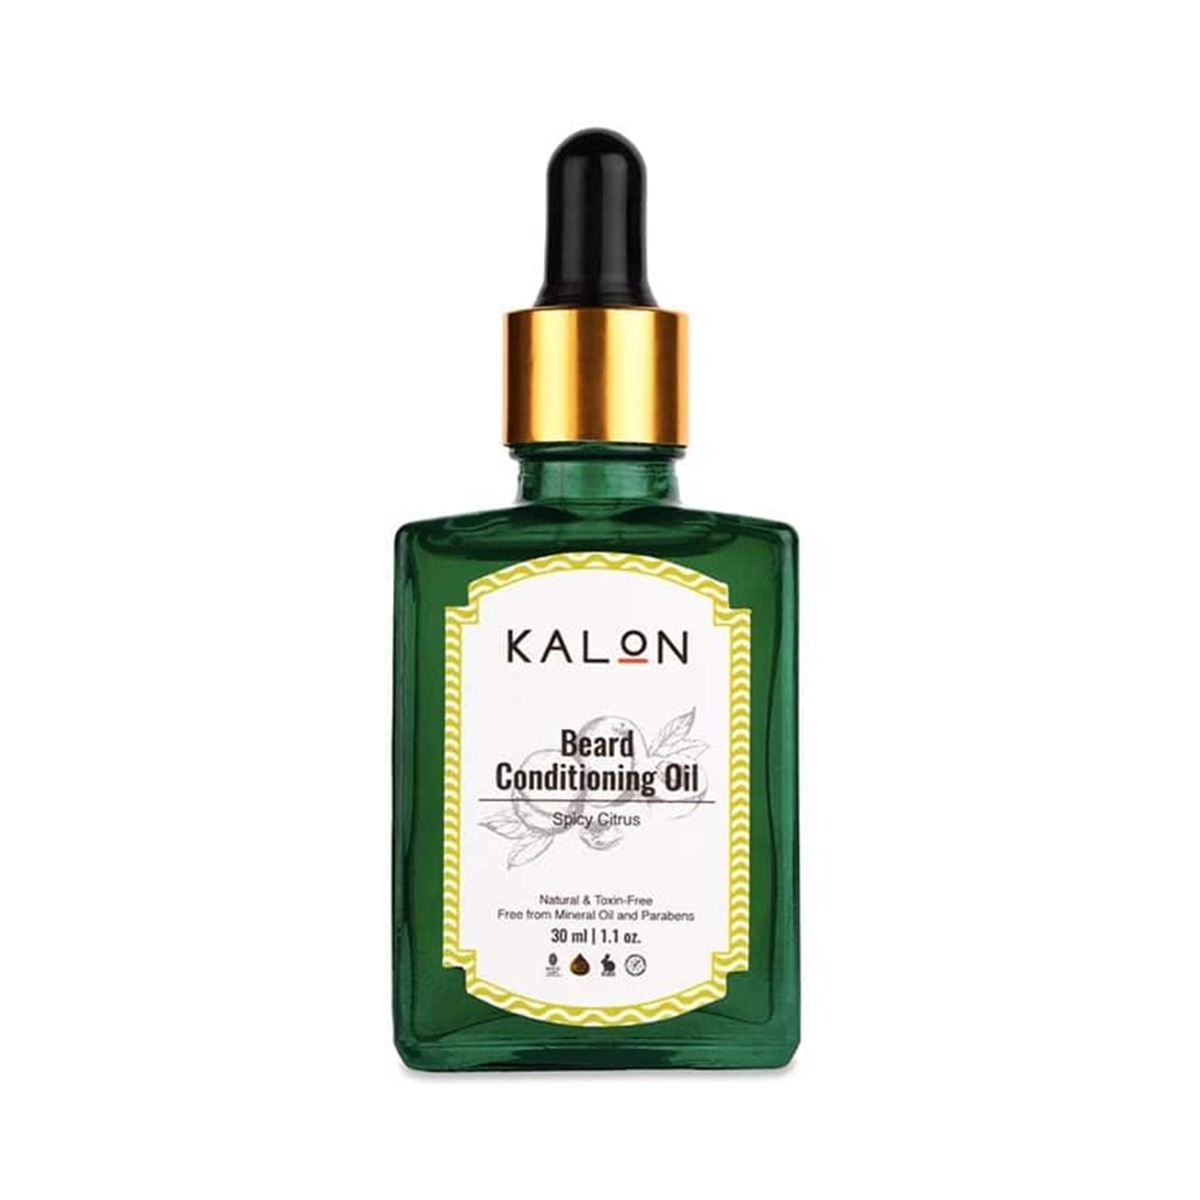 Kalon Natural Spicy Citrus Beard Conditioning Oil, 30ml